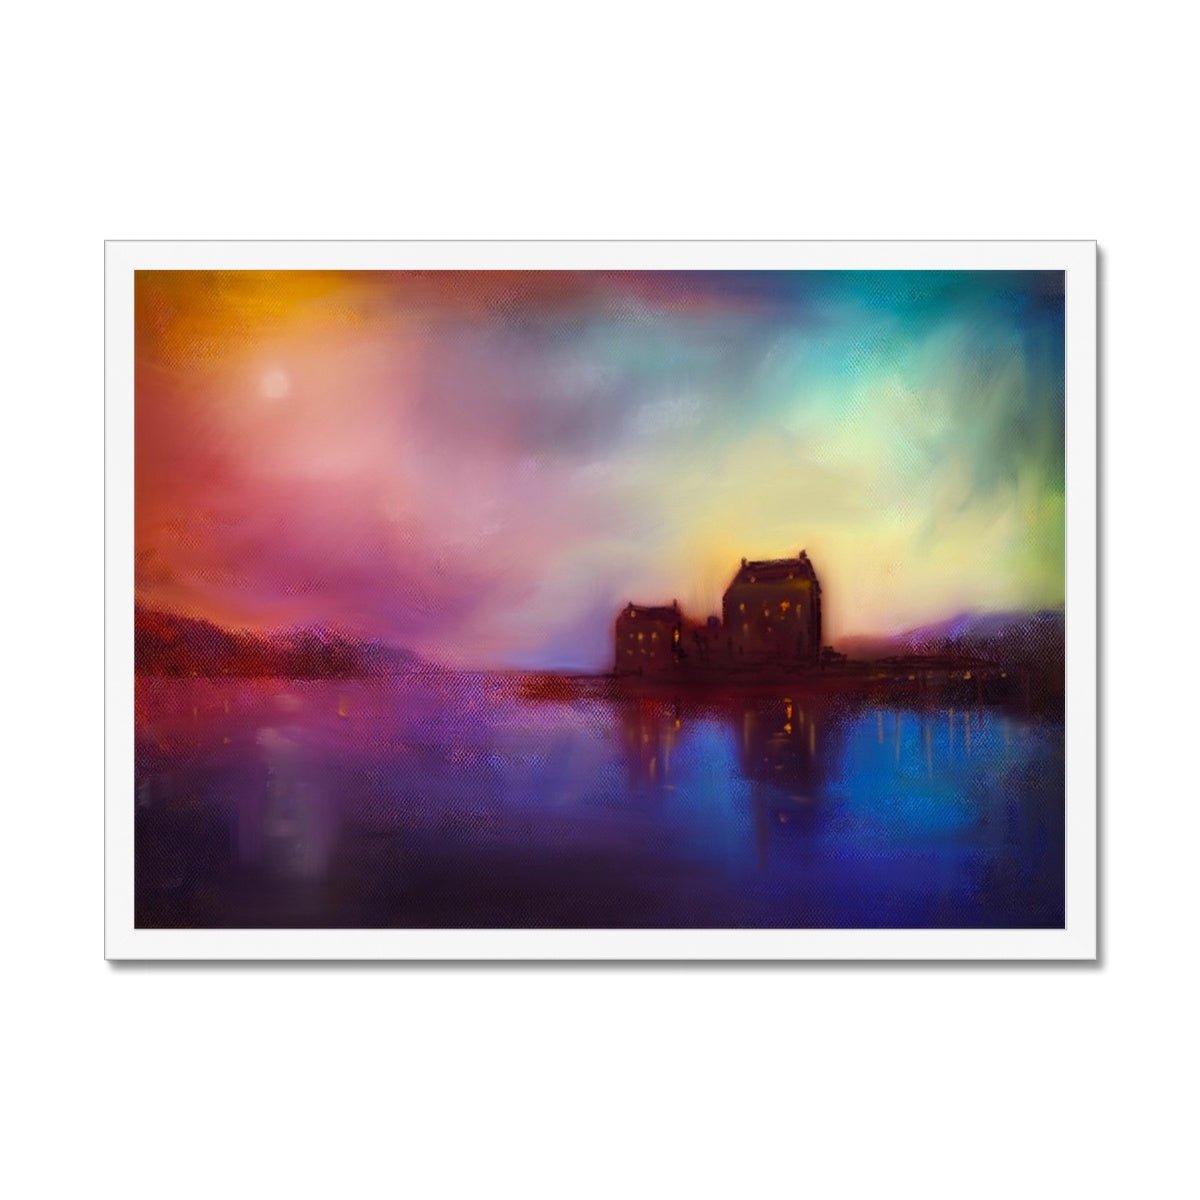 Eilean Donan Castle Sunset Painting | Framed Prints From Scotland-Framed Prints-Historic & Iconic Scotland Art Gallery-A2 Landscape-White Frame-Paintings, Prints, Homeware, Art Gifts From Scotland By Scottish Artist Kevin Hunter